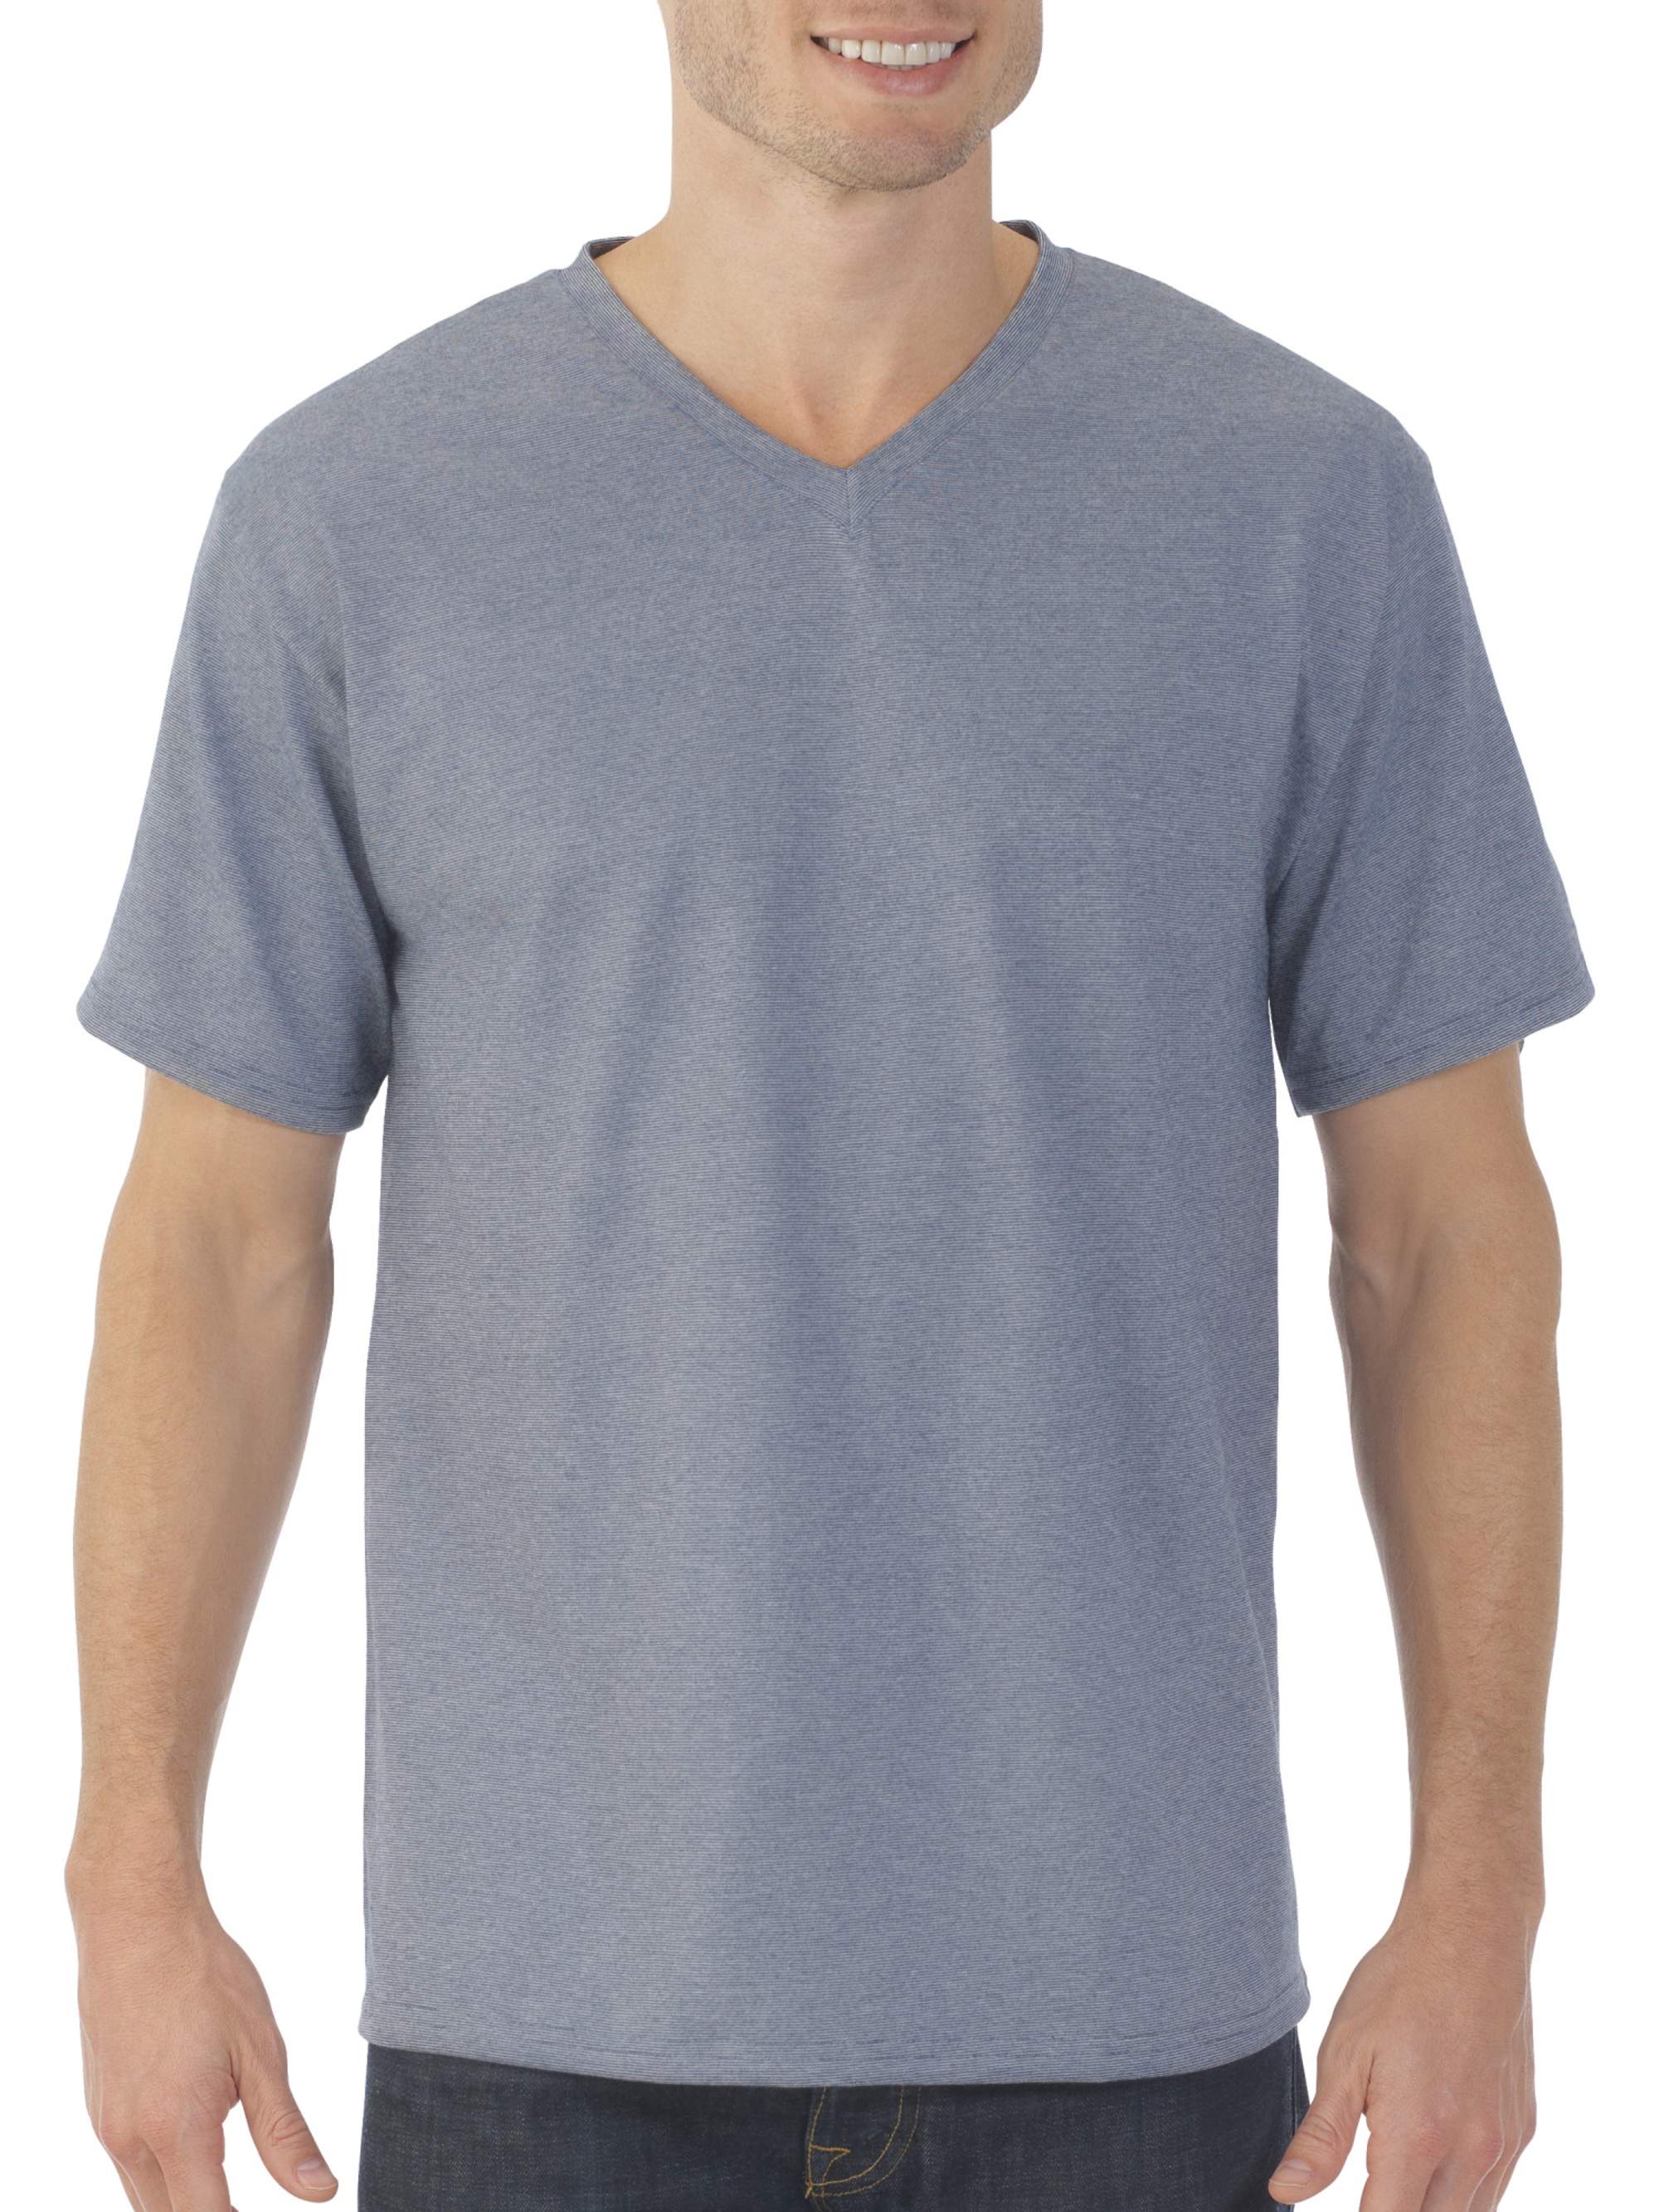 Fruit of the Loom Men's Platinum Eversoft Short Sleeve V Neck T Shirt, up to Size 4XL - image 1 of 3